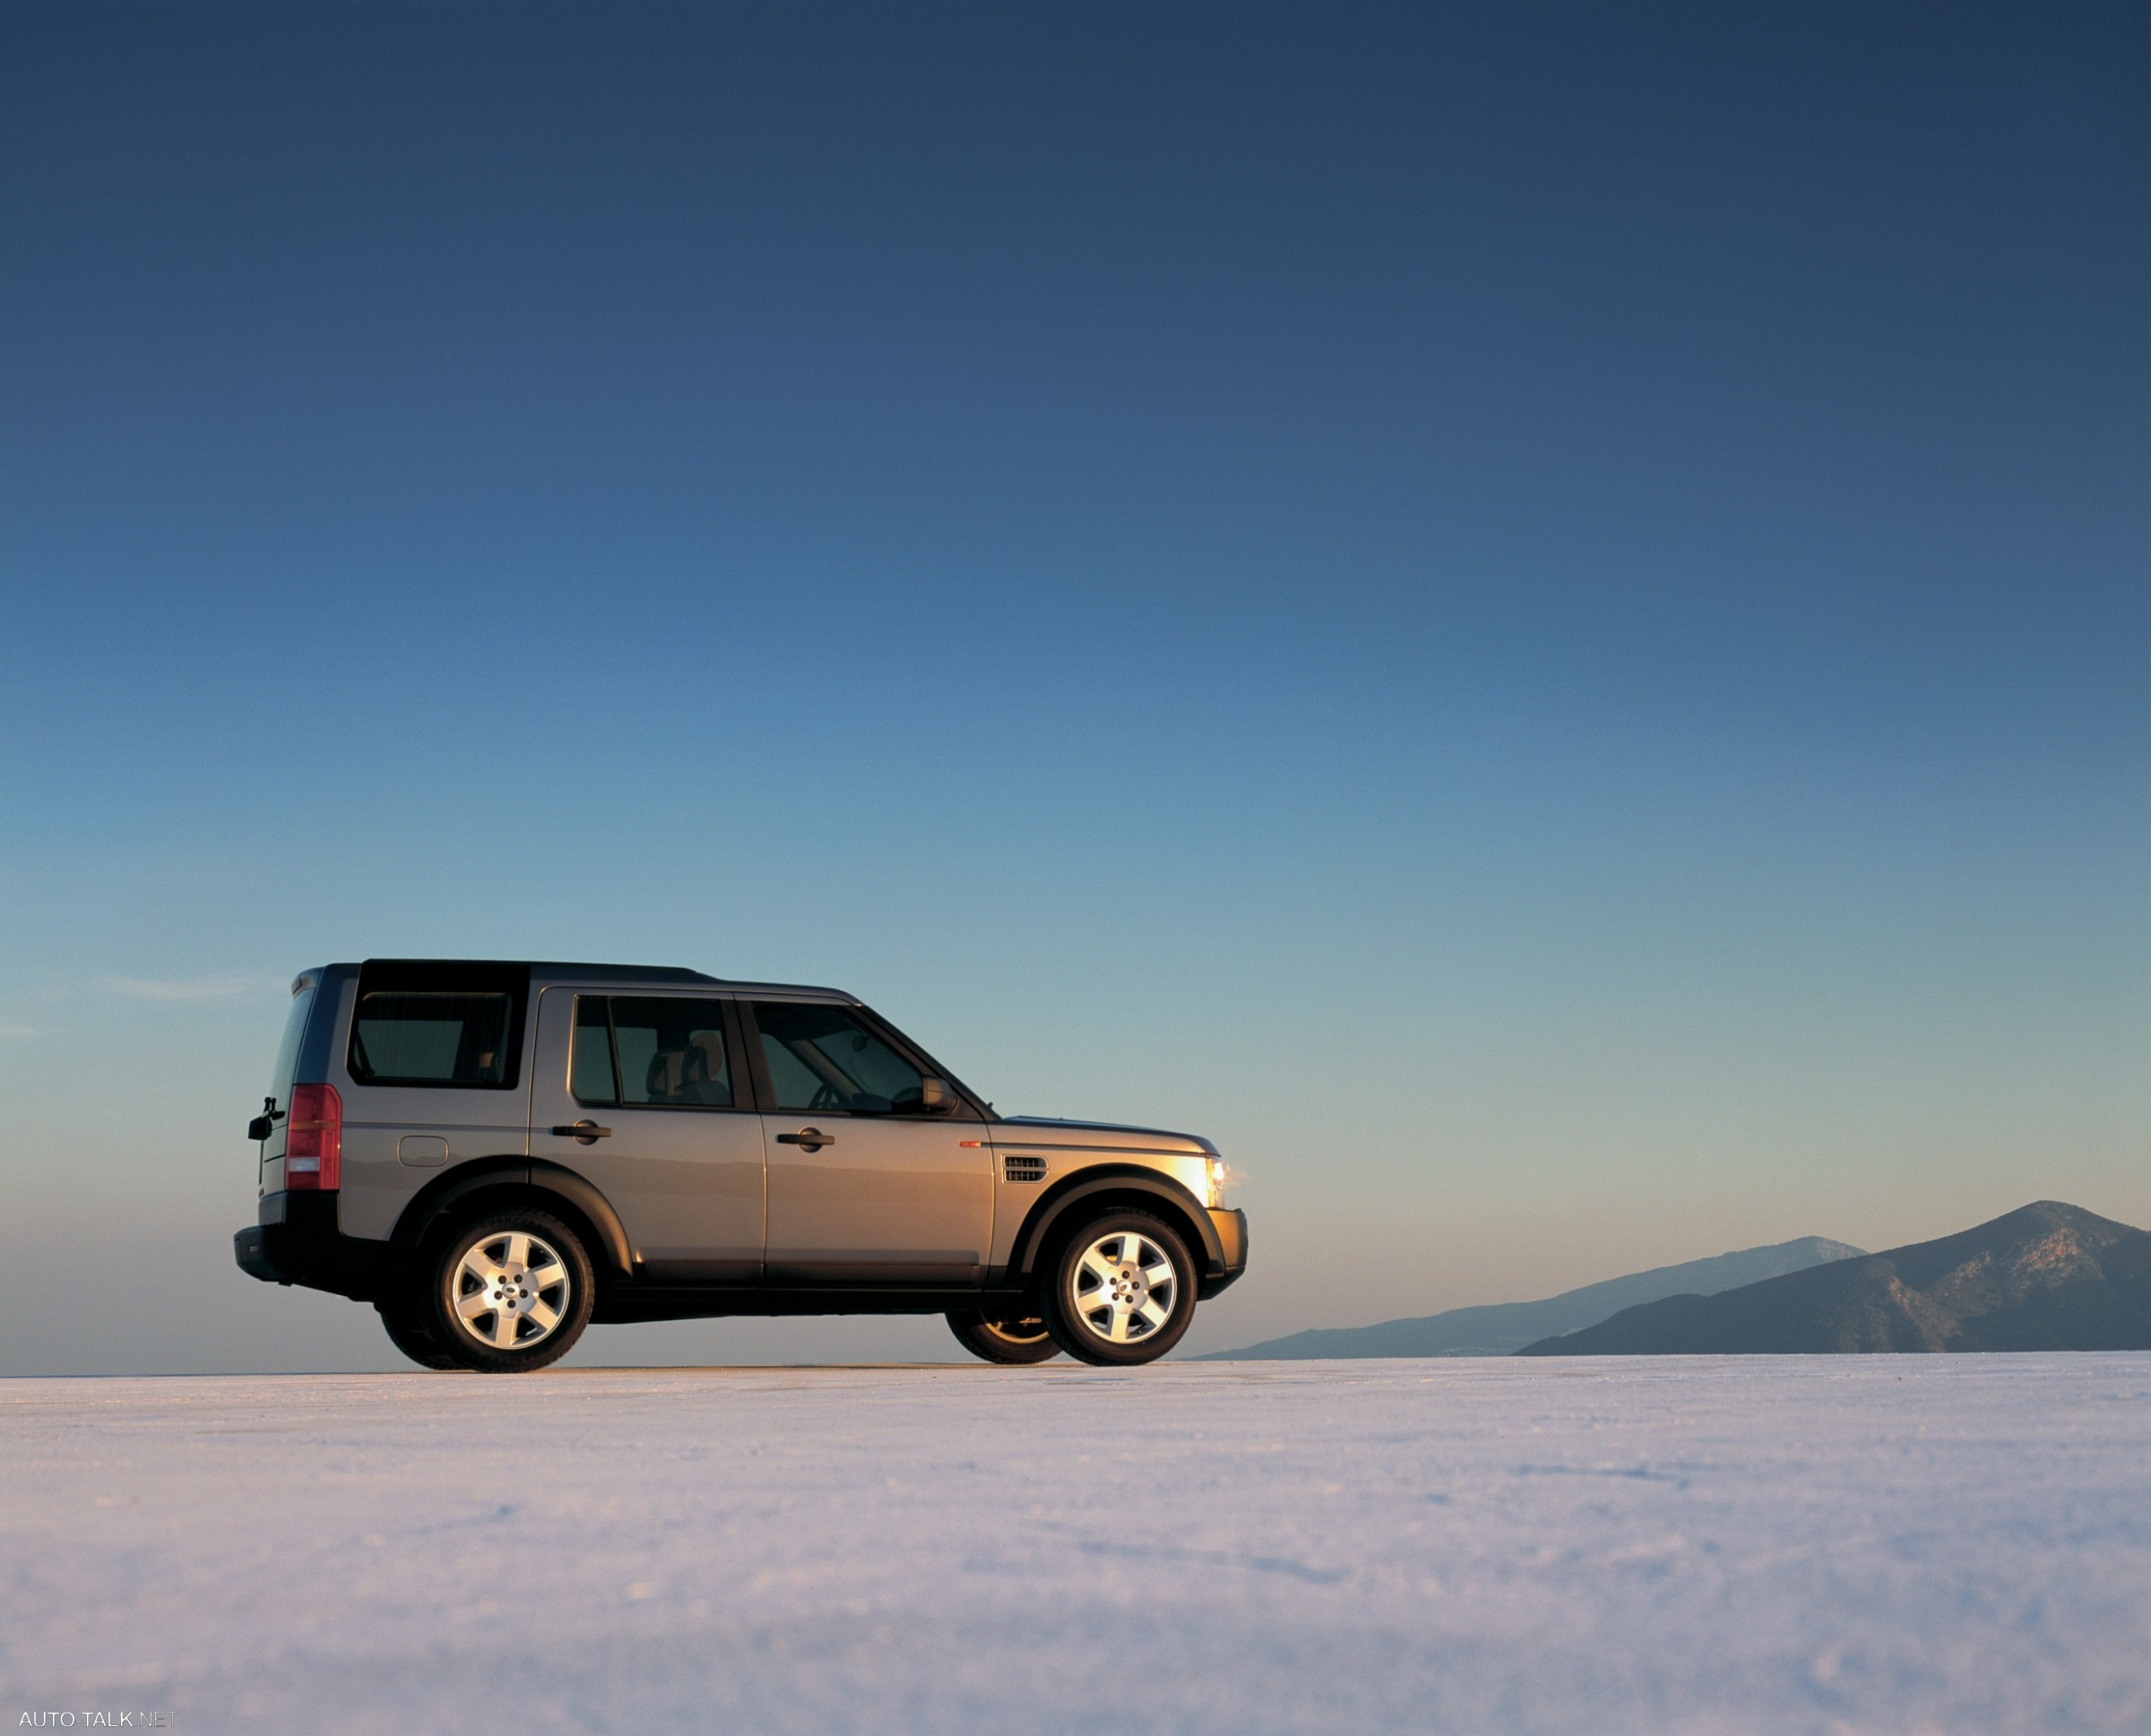 Дискавери подряд. Land Rover Discovery 3. Land Rover Discovery 2005. Land Rover Discovery 3 2009. Land Rover Discovery 4 Overland.